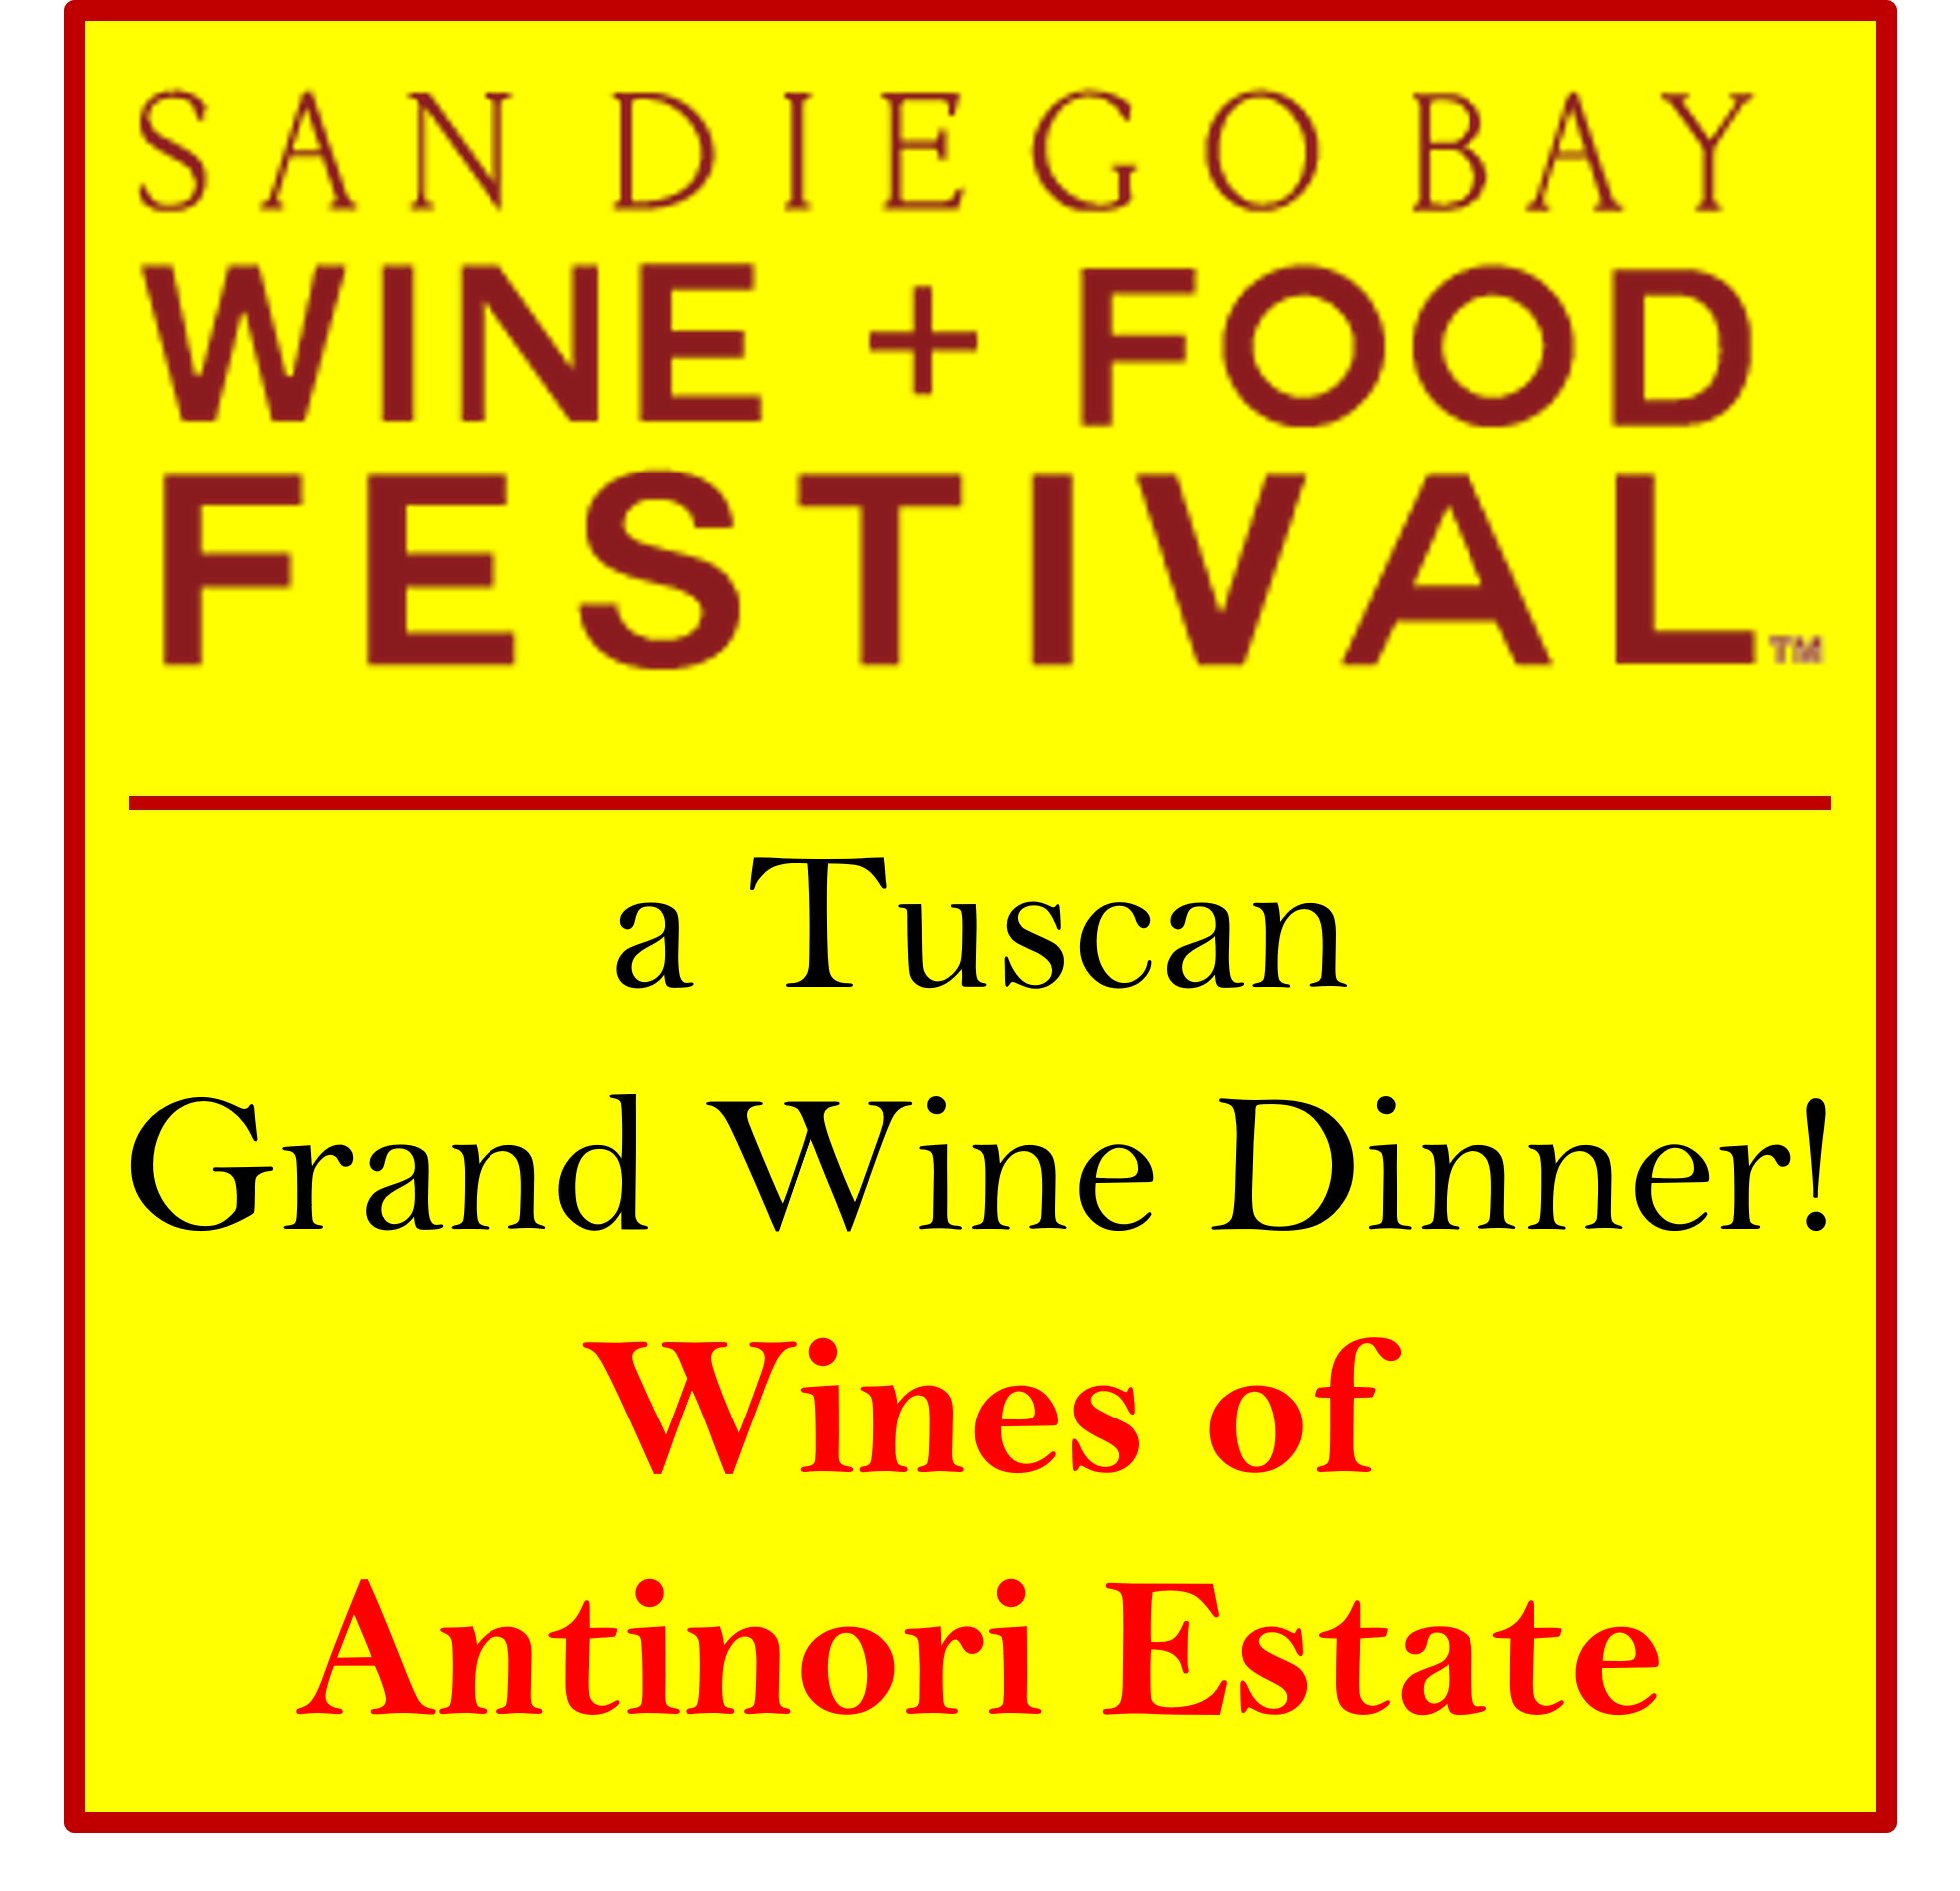 <a id="Solare-Tuscan-Grand-Wine-Dinner"></a>A Tuscan Grand Wine Dinner @ Solare! --San Diego Bay Wine + Food Festival